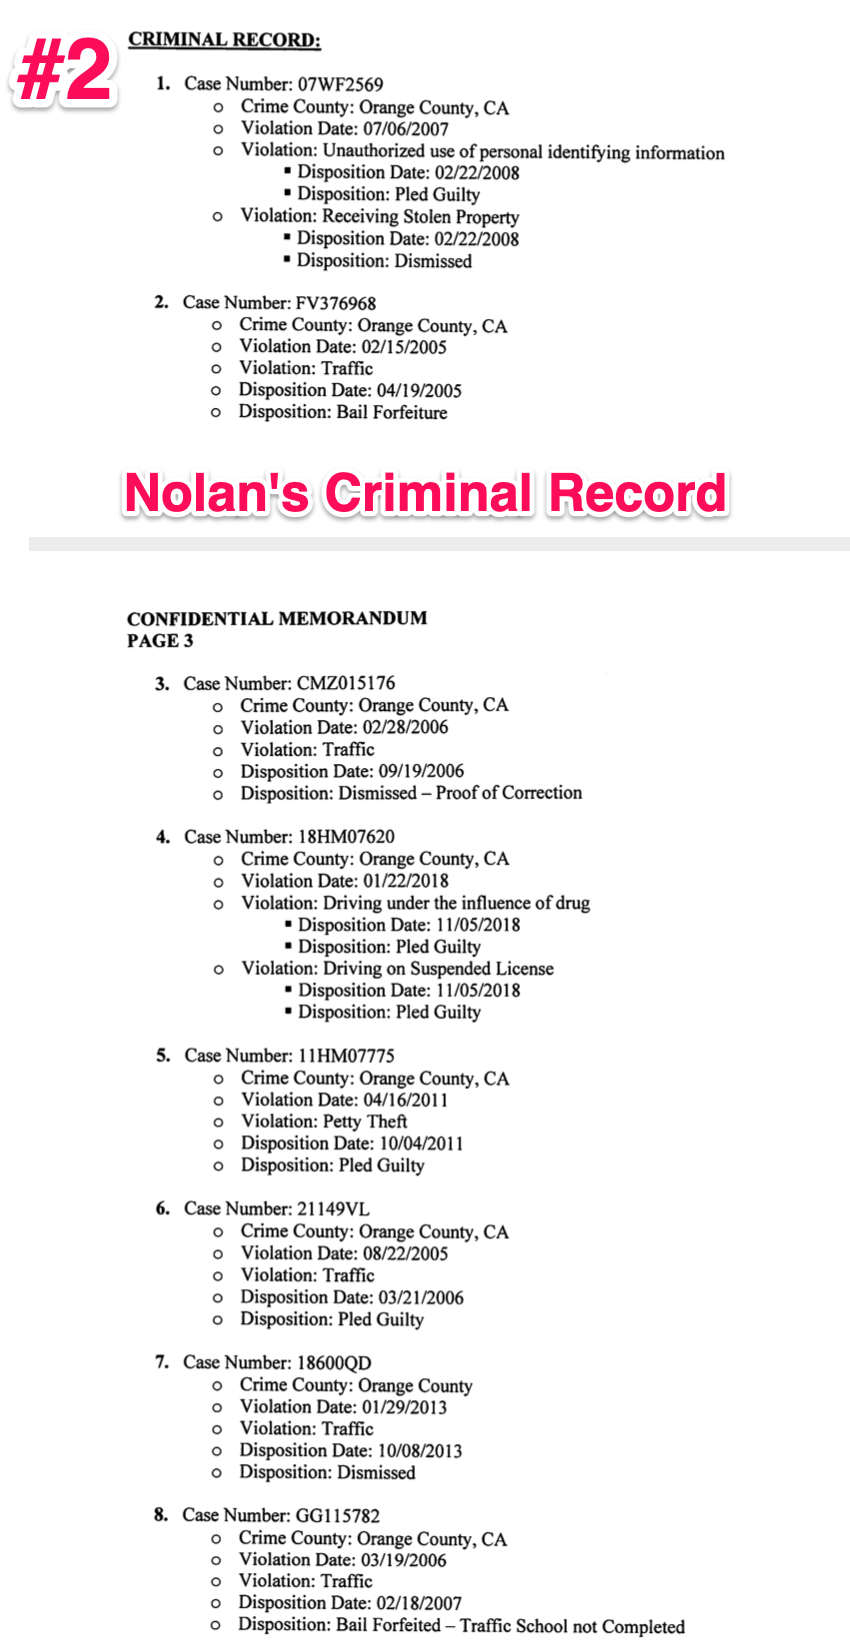 Nolan Chan's Full Criminal Record